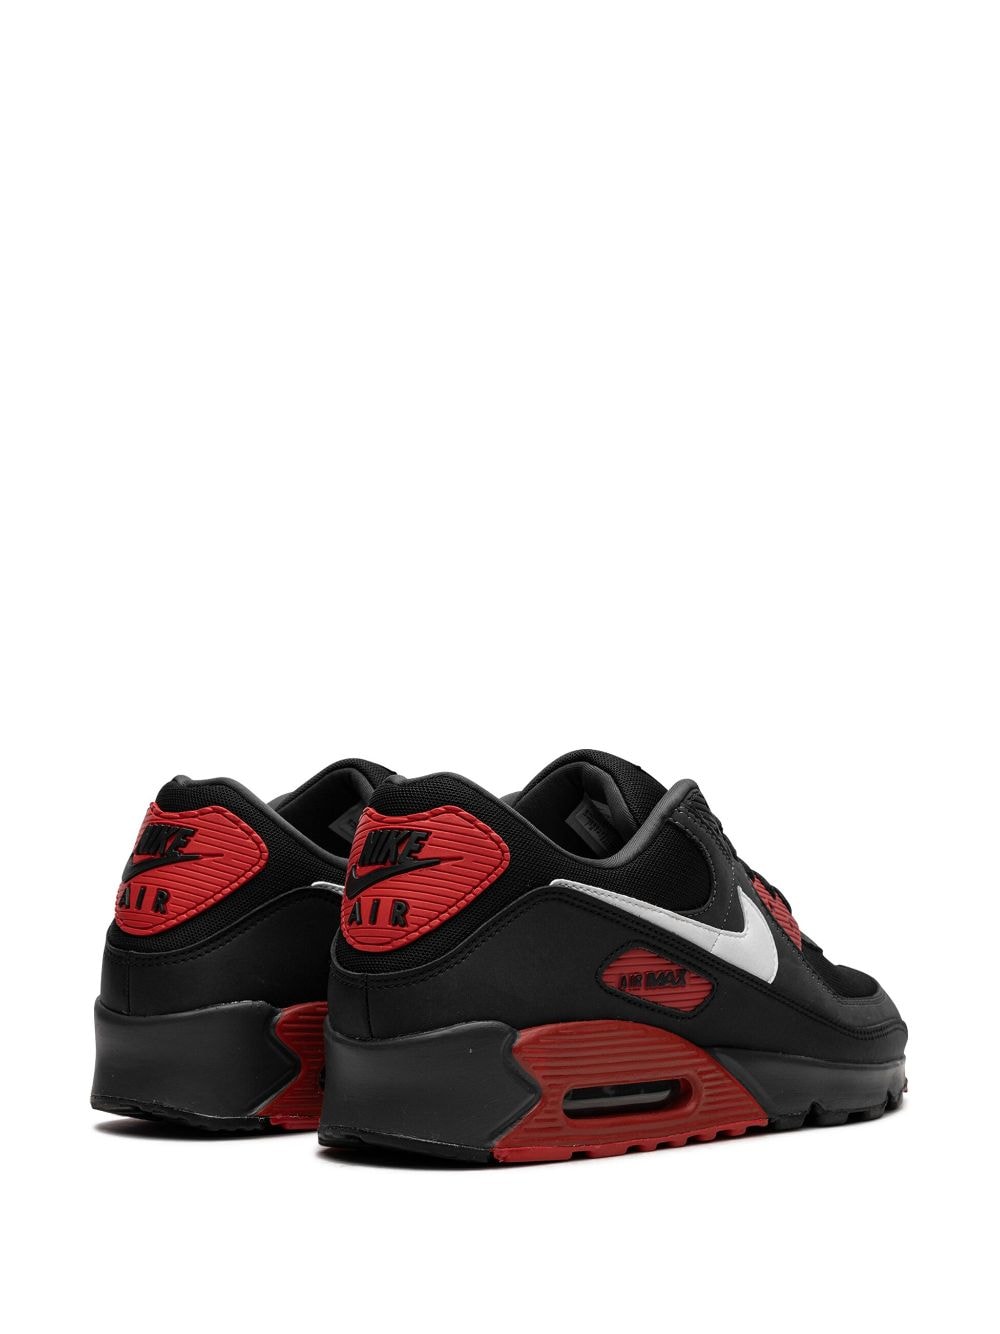 Shop Nike Air Max 90 "black/red" Sneakers